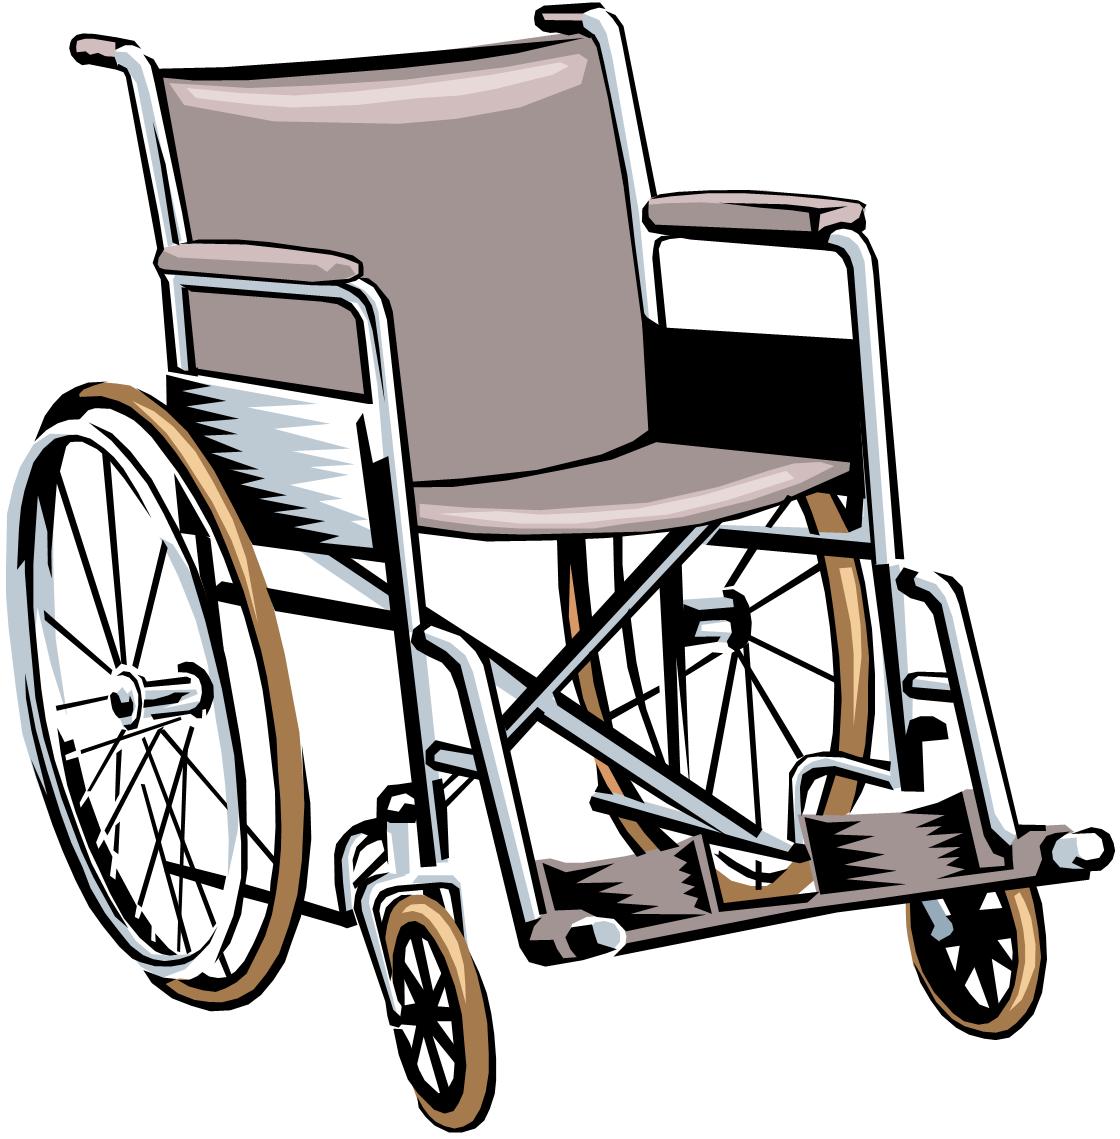 Wheelchair clipart tumundografico 4